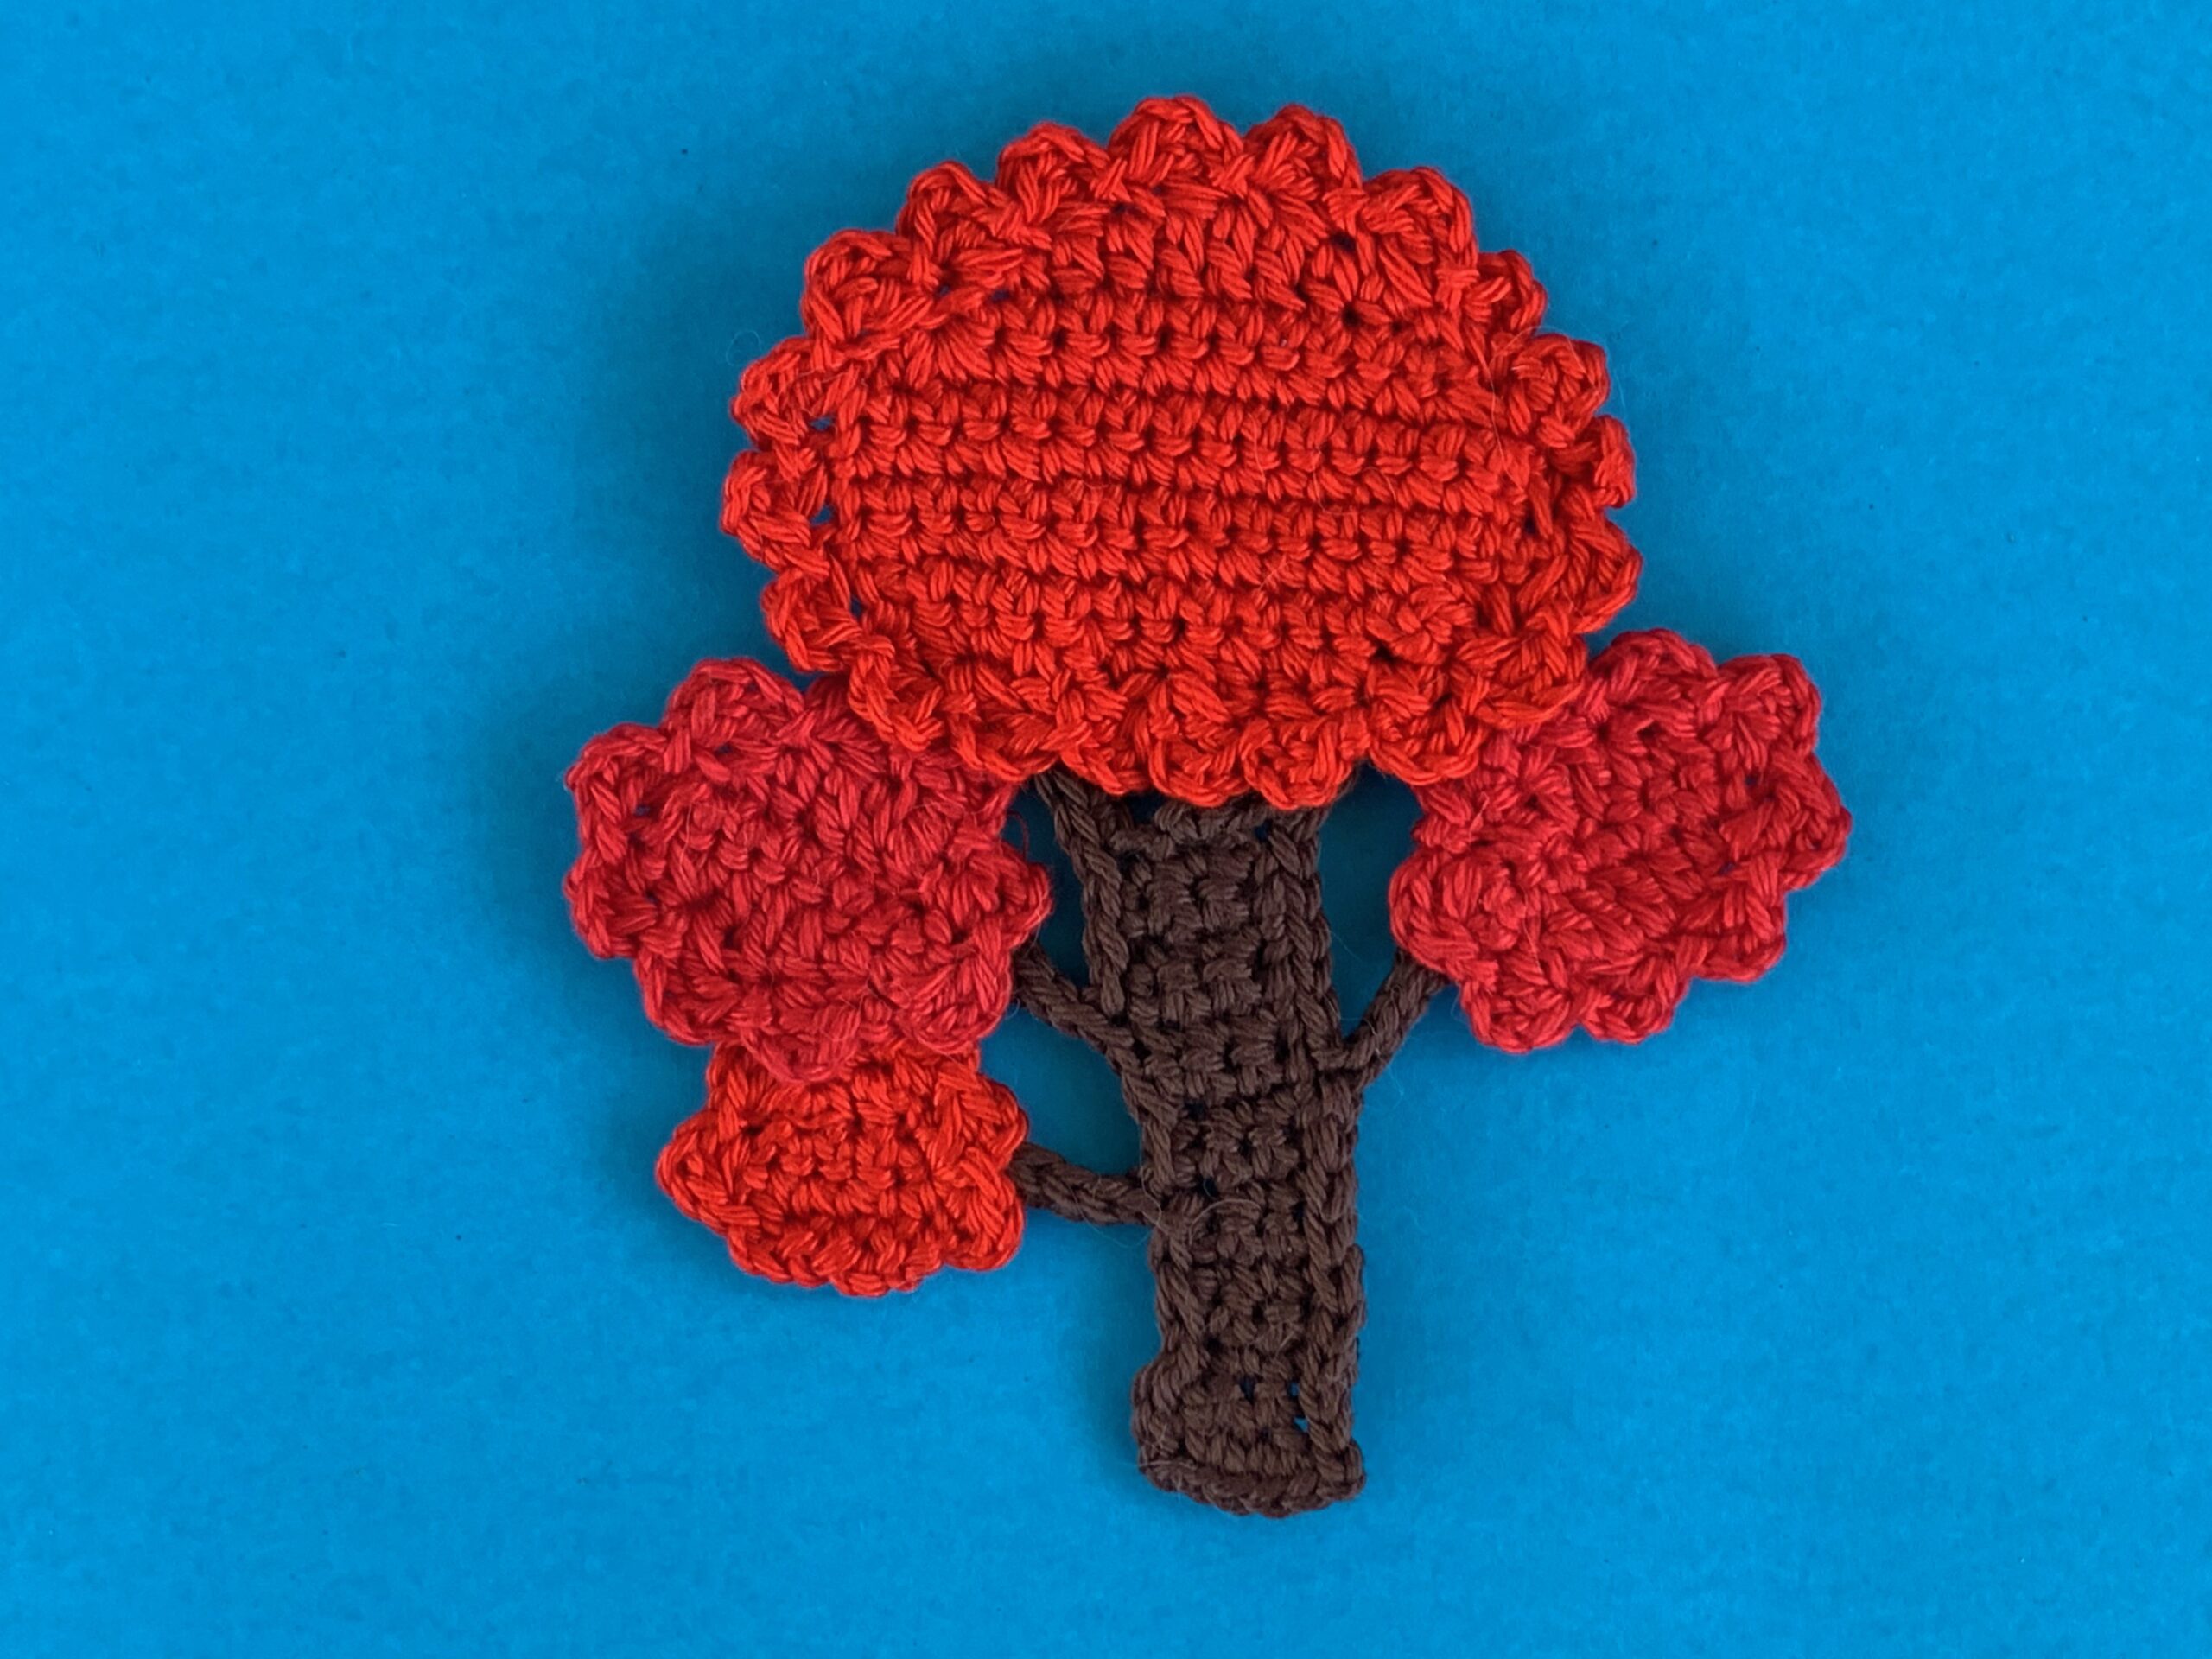 Finished crochet tree 4 ply landscape